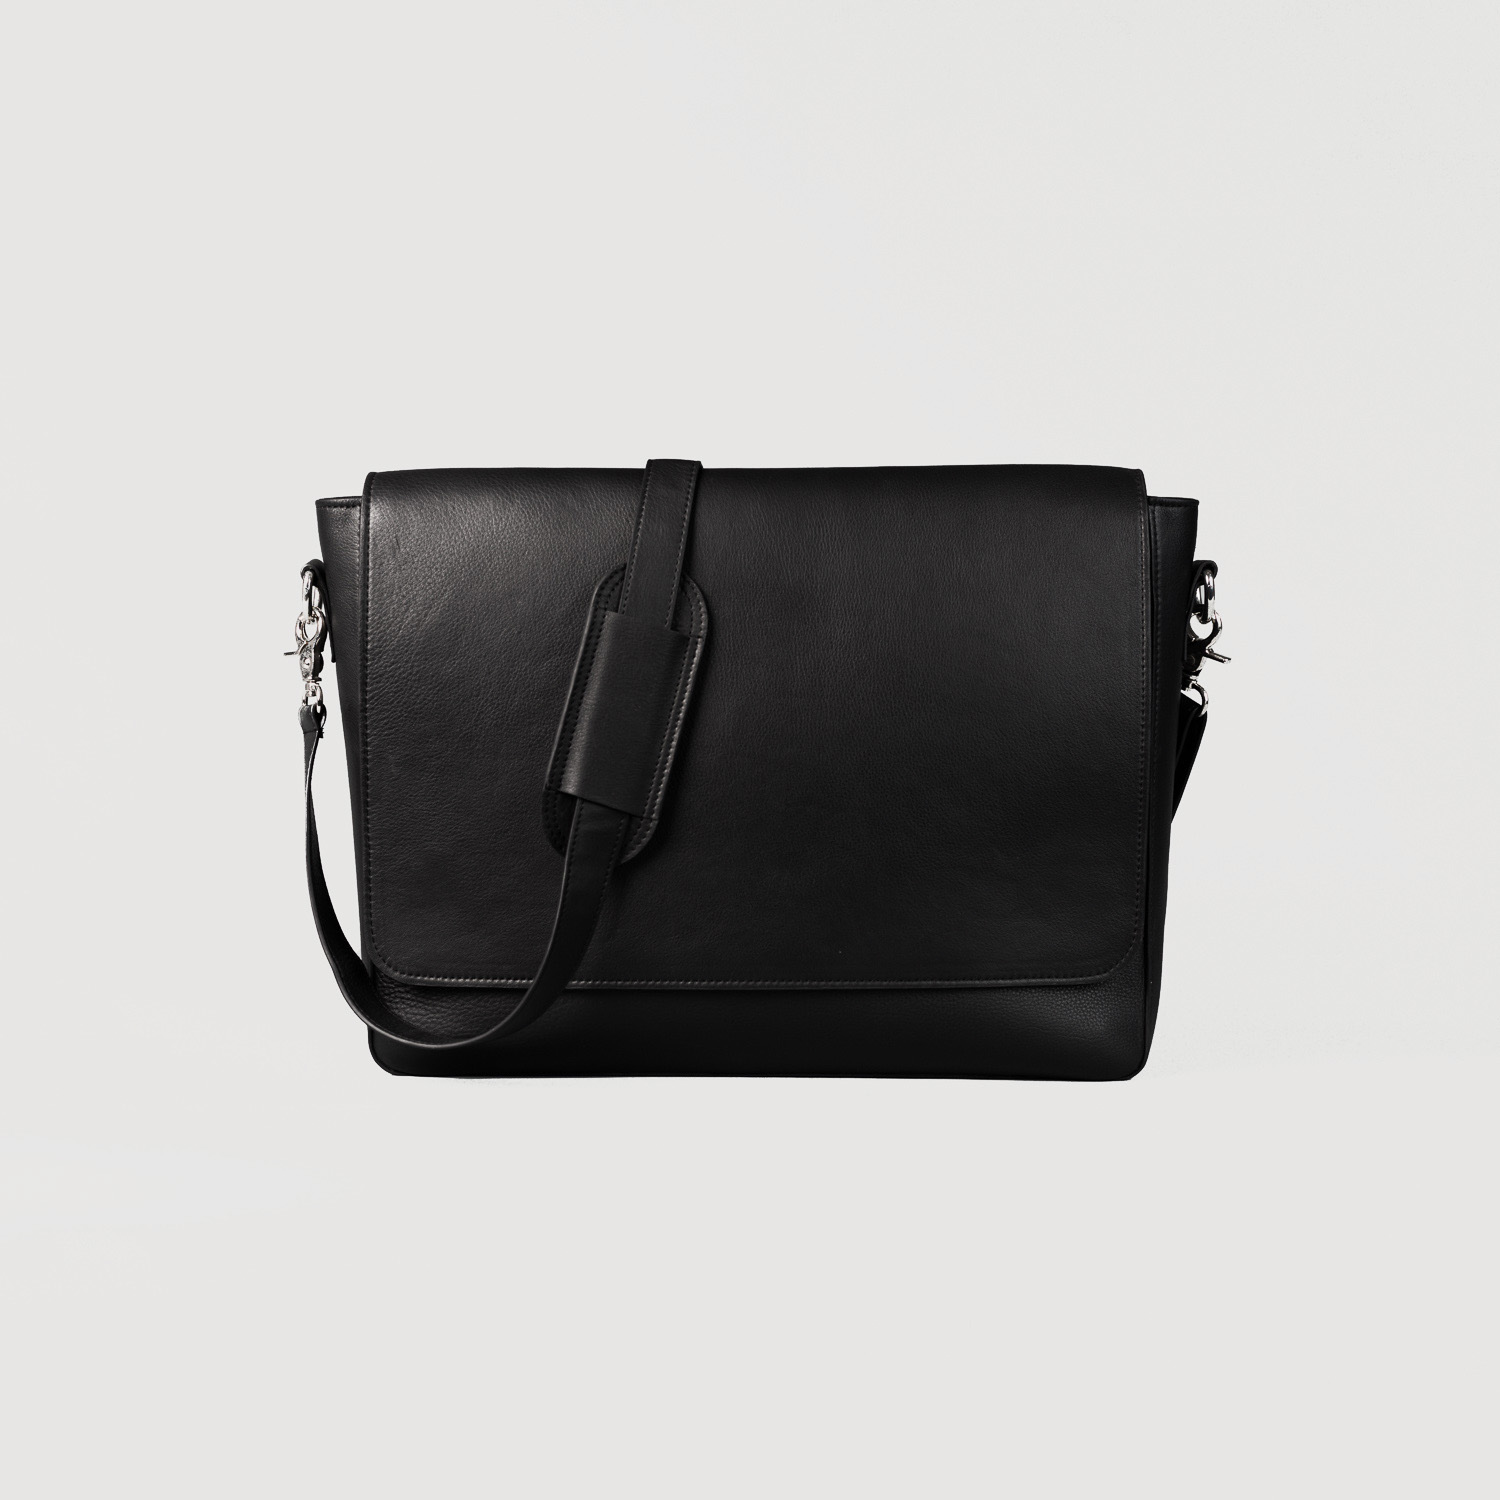 The Carismatico Black Leather Messenger Bag